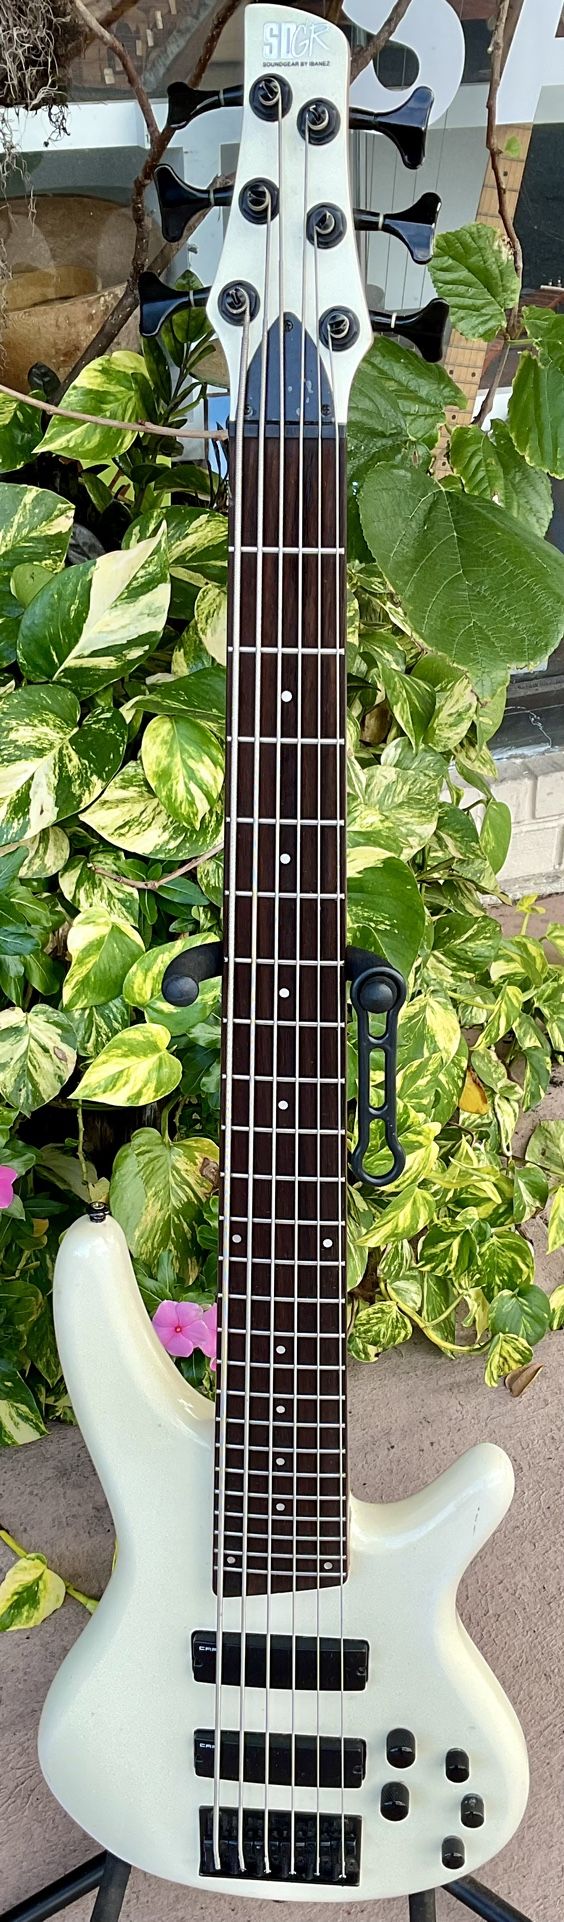 Ibanez Soundgear 6 String Bass Guitar  